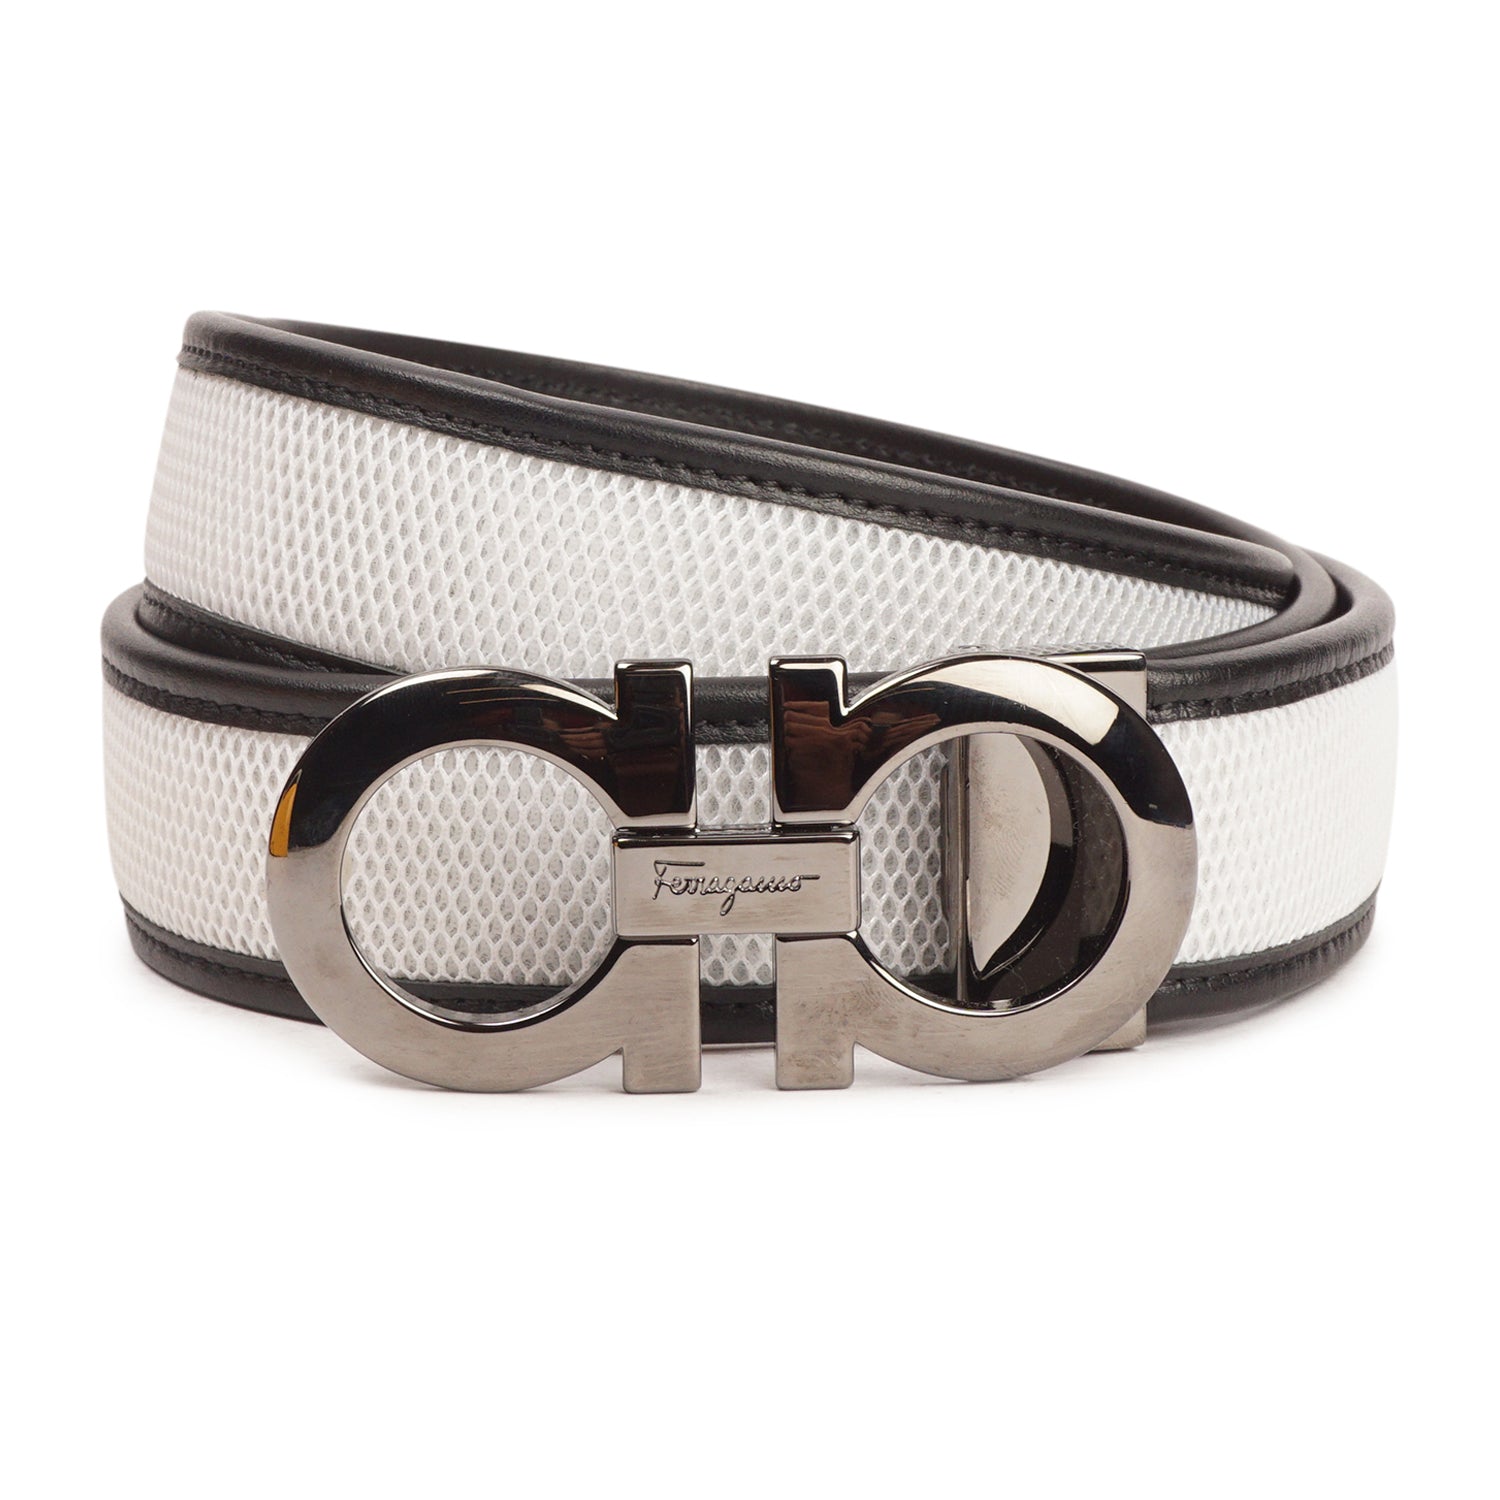 Salvatore ferragamo gancini adjustible belt in white